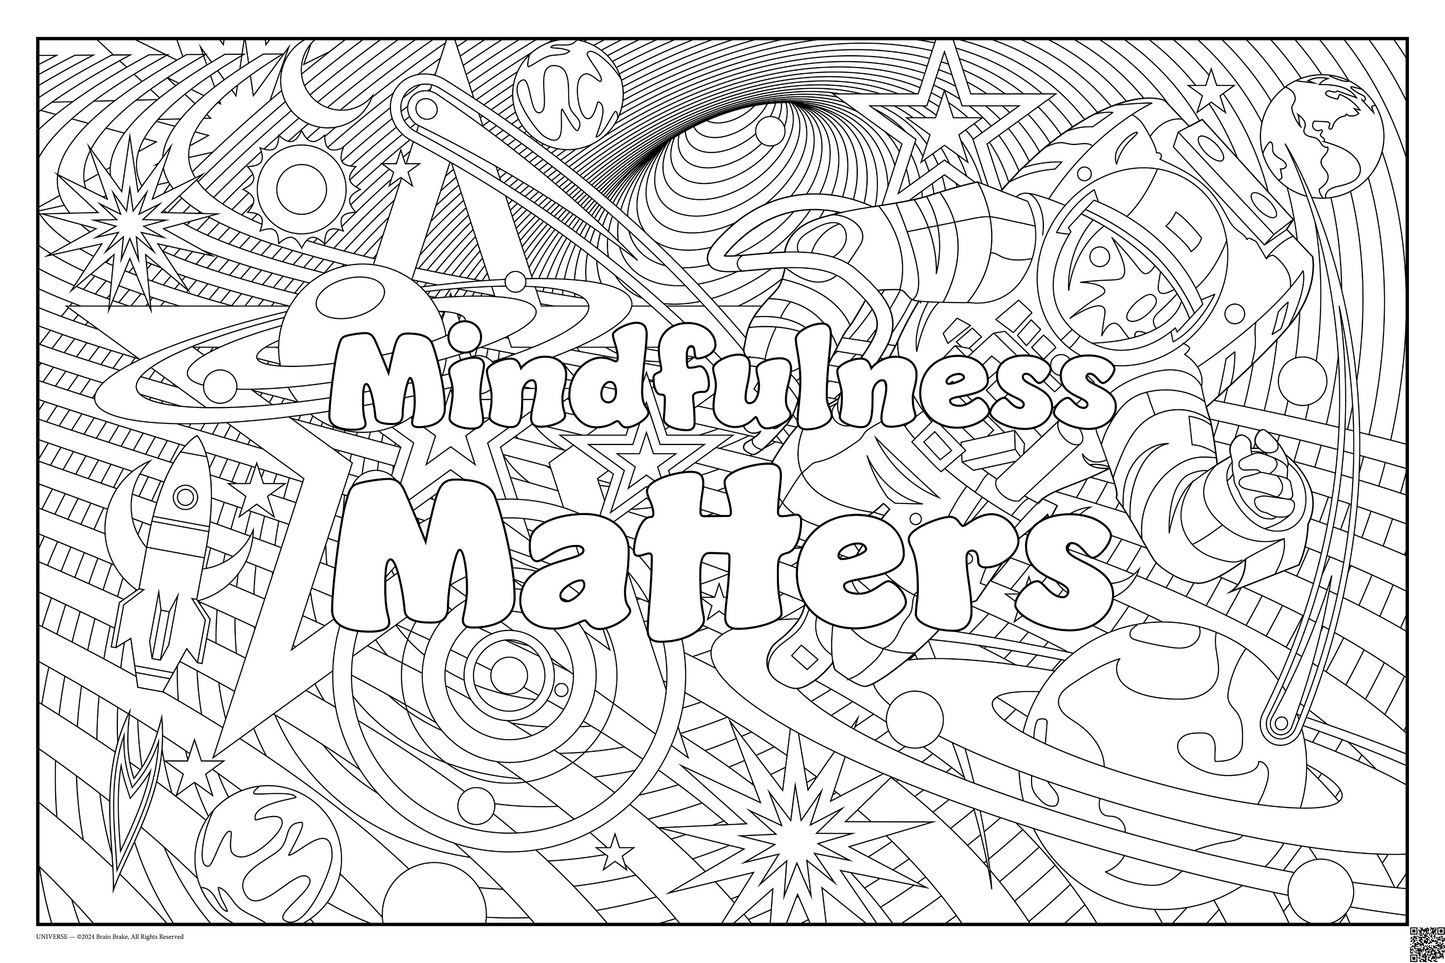 Calming Corner: Mindfulness Matters